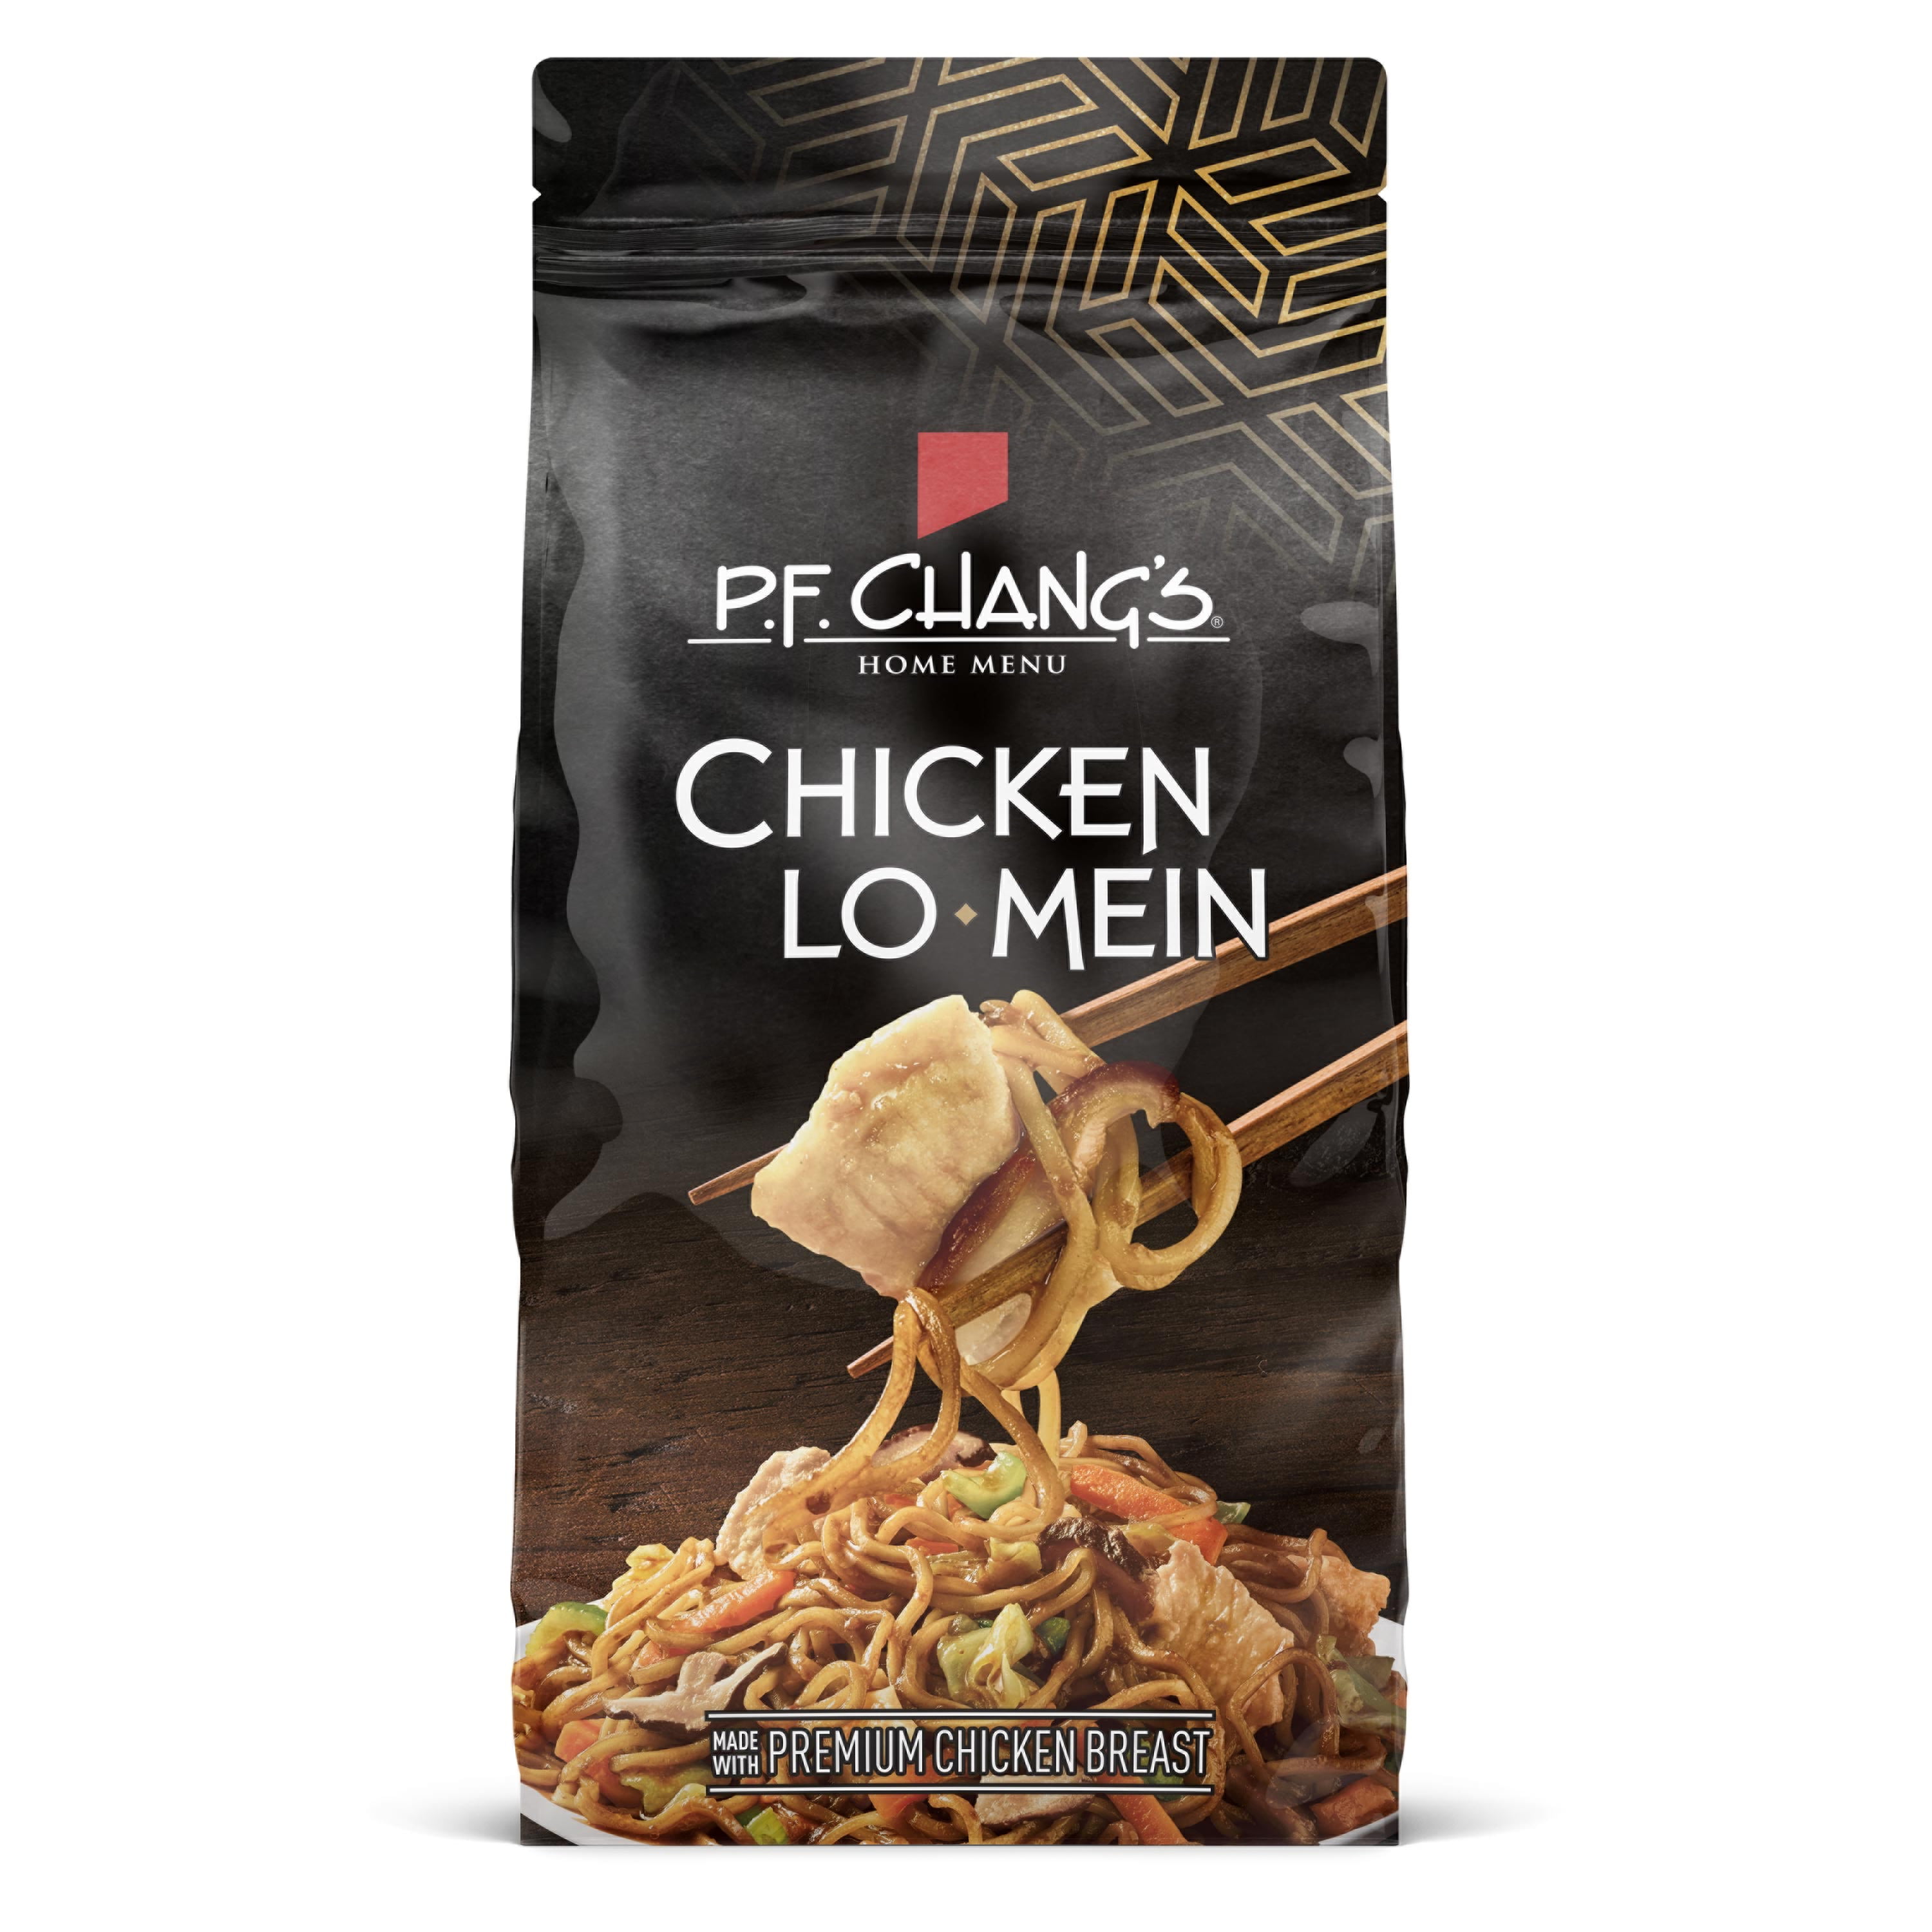 P.F. Chang's Home Menu Chicken Lo Mein, 22 oz - Walmart.com